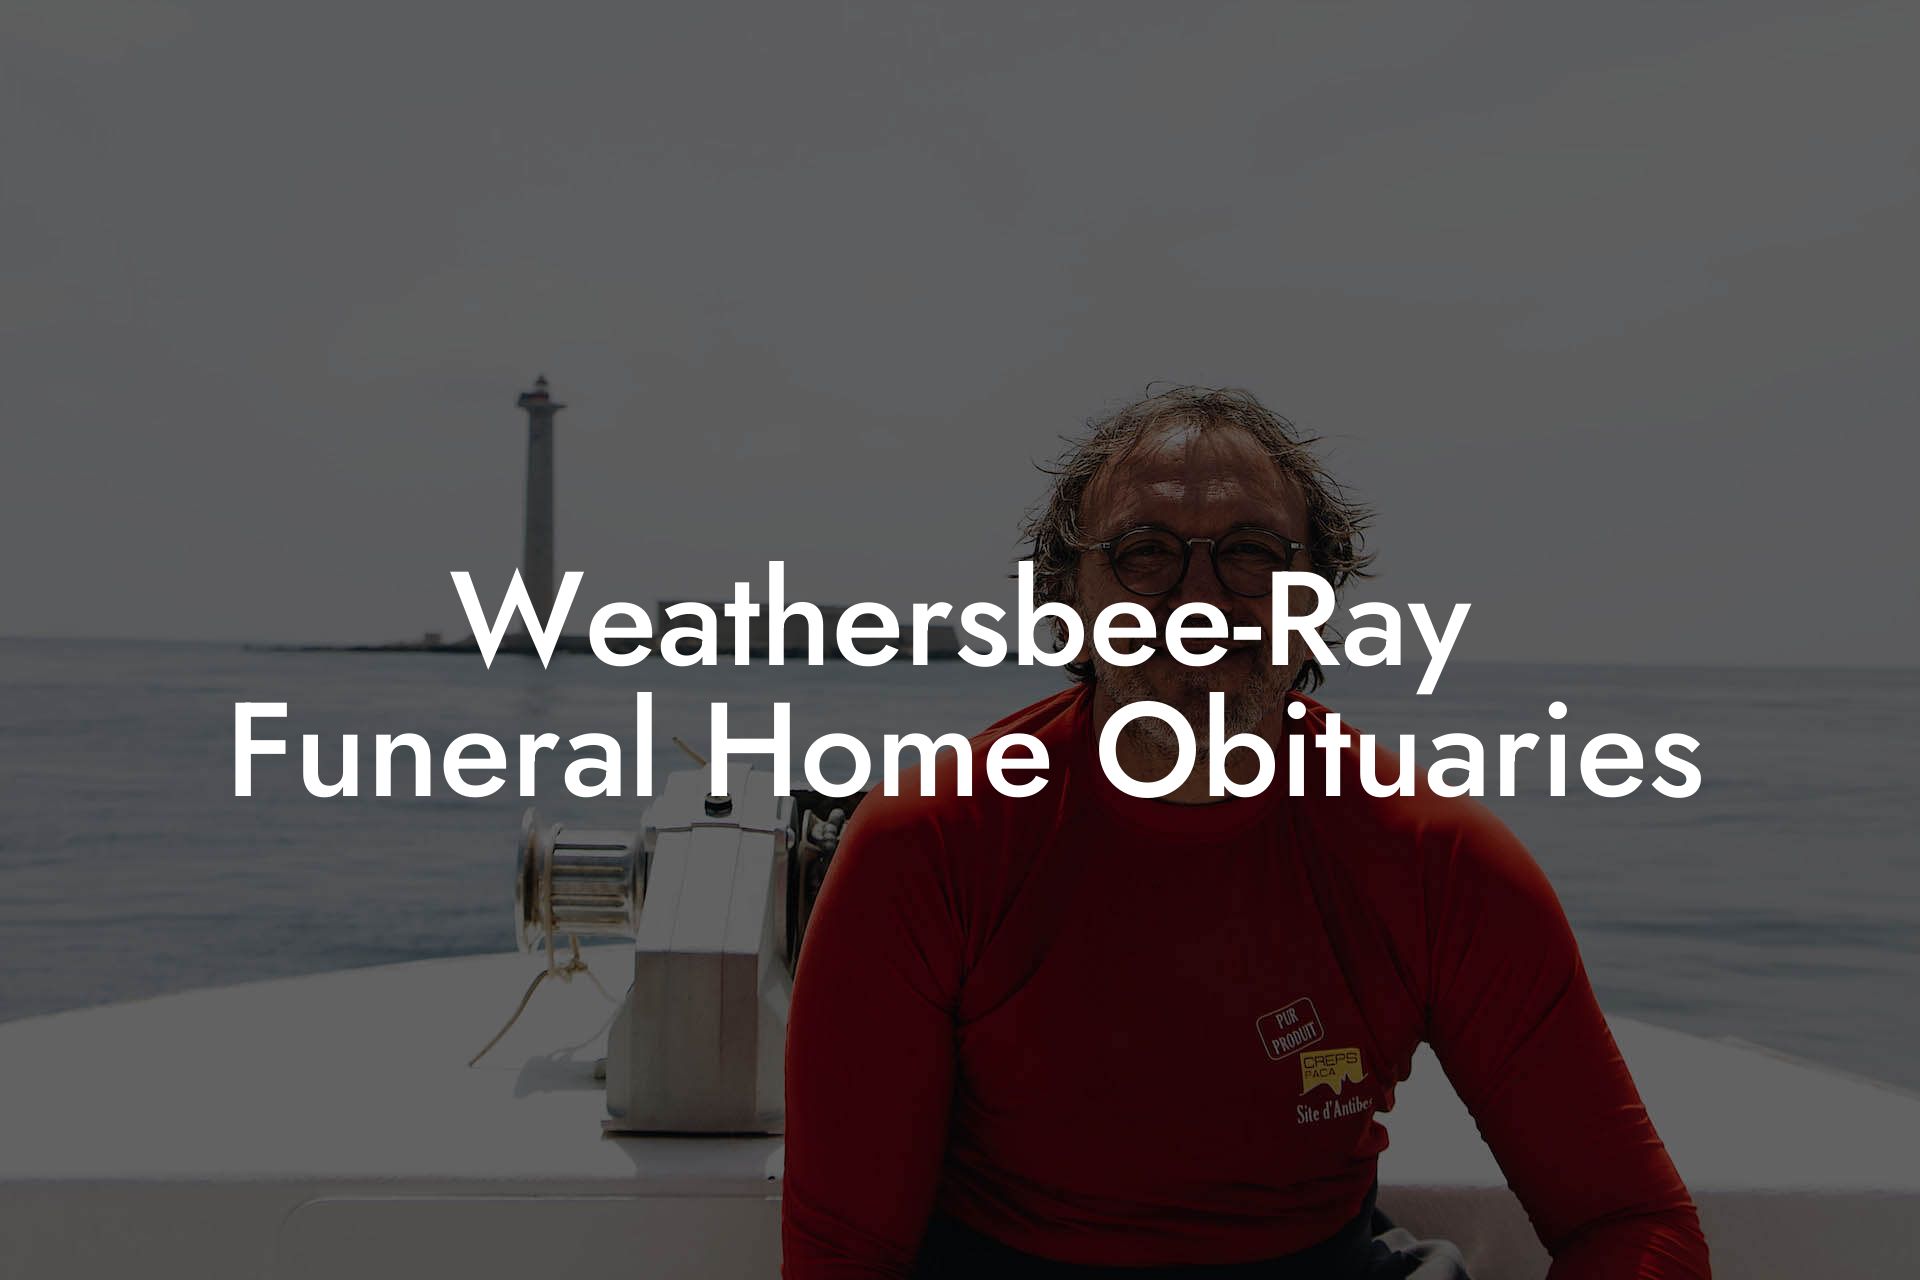 Weathersbee-Ray Funeral Home Obituaries